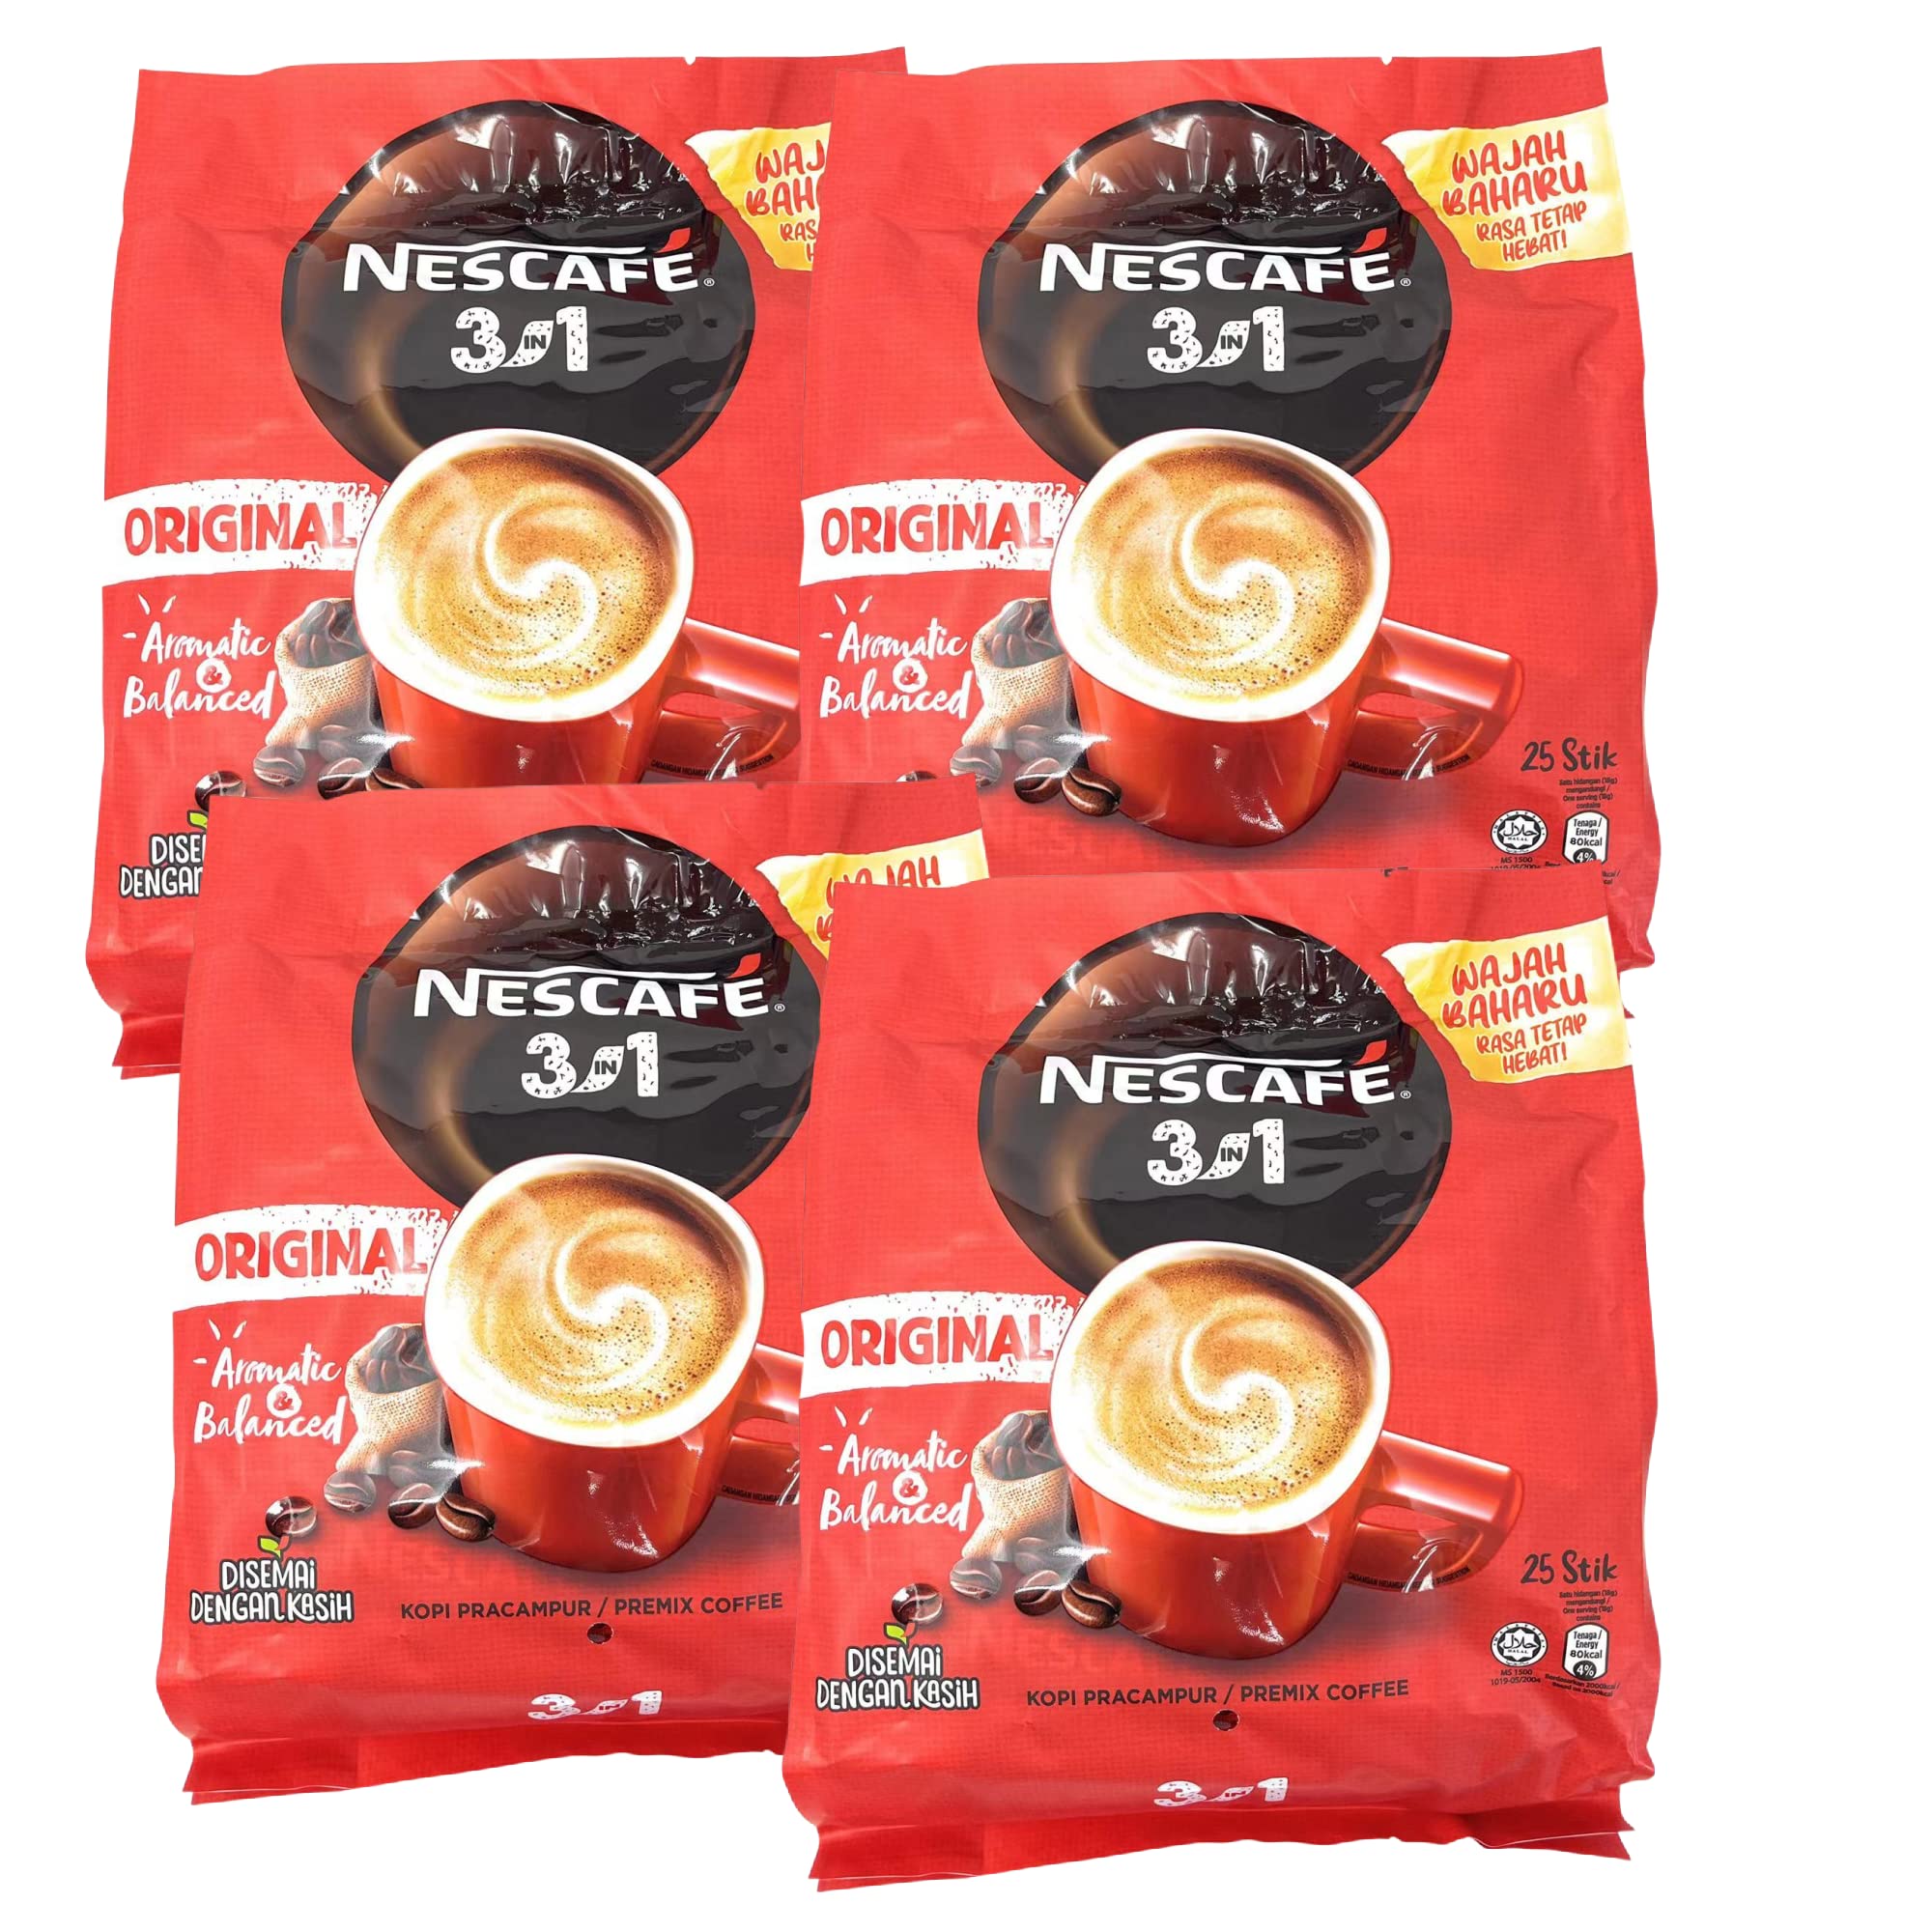 Nescafe 3 in 1 Instant Coffee - Original